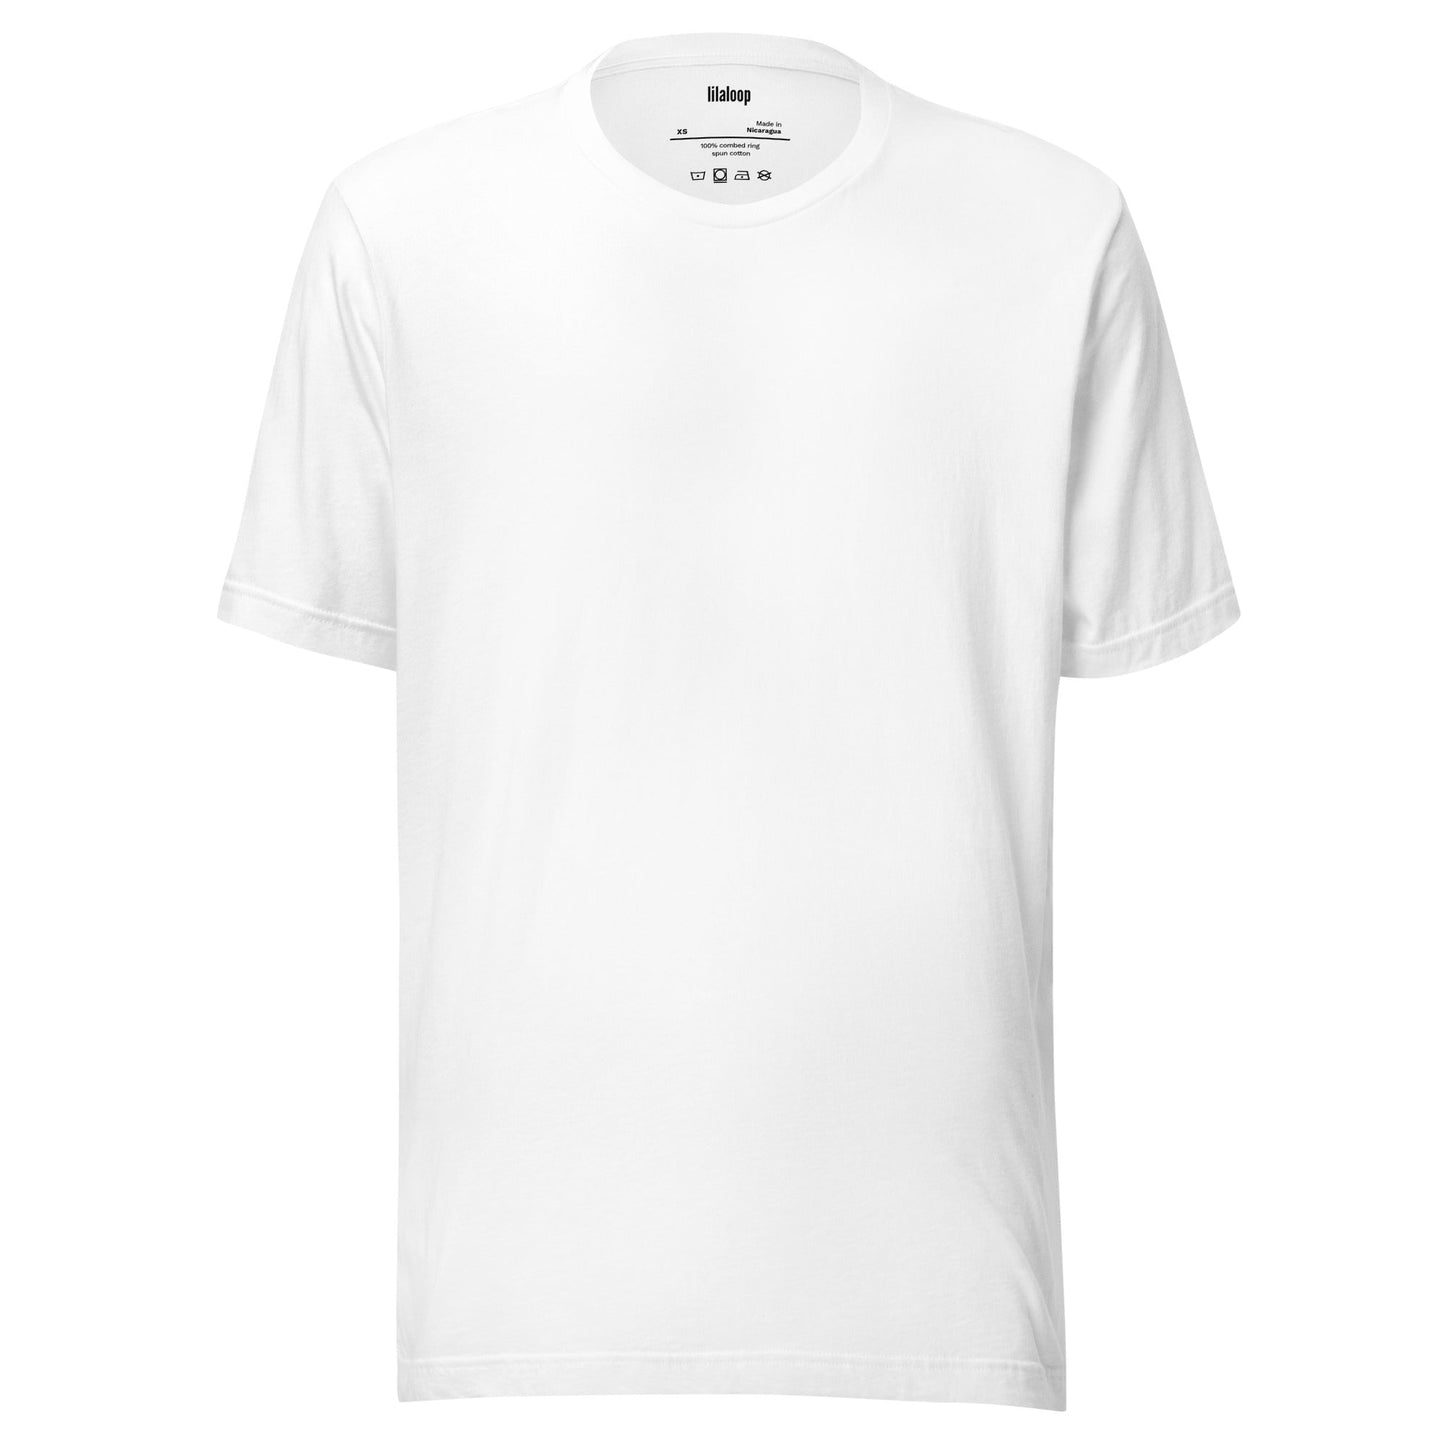 Don't Quit - Unisex t-shirt - lilaloop - T-shirt